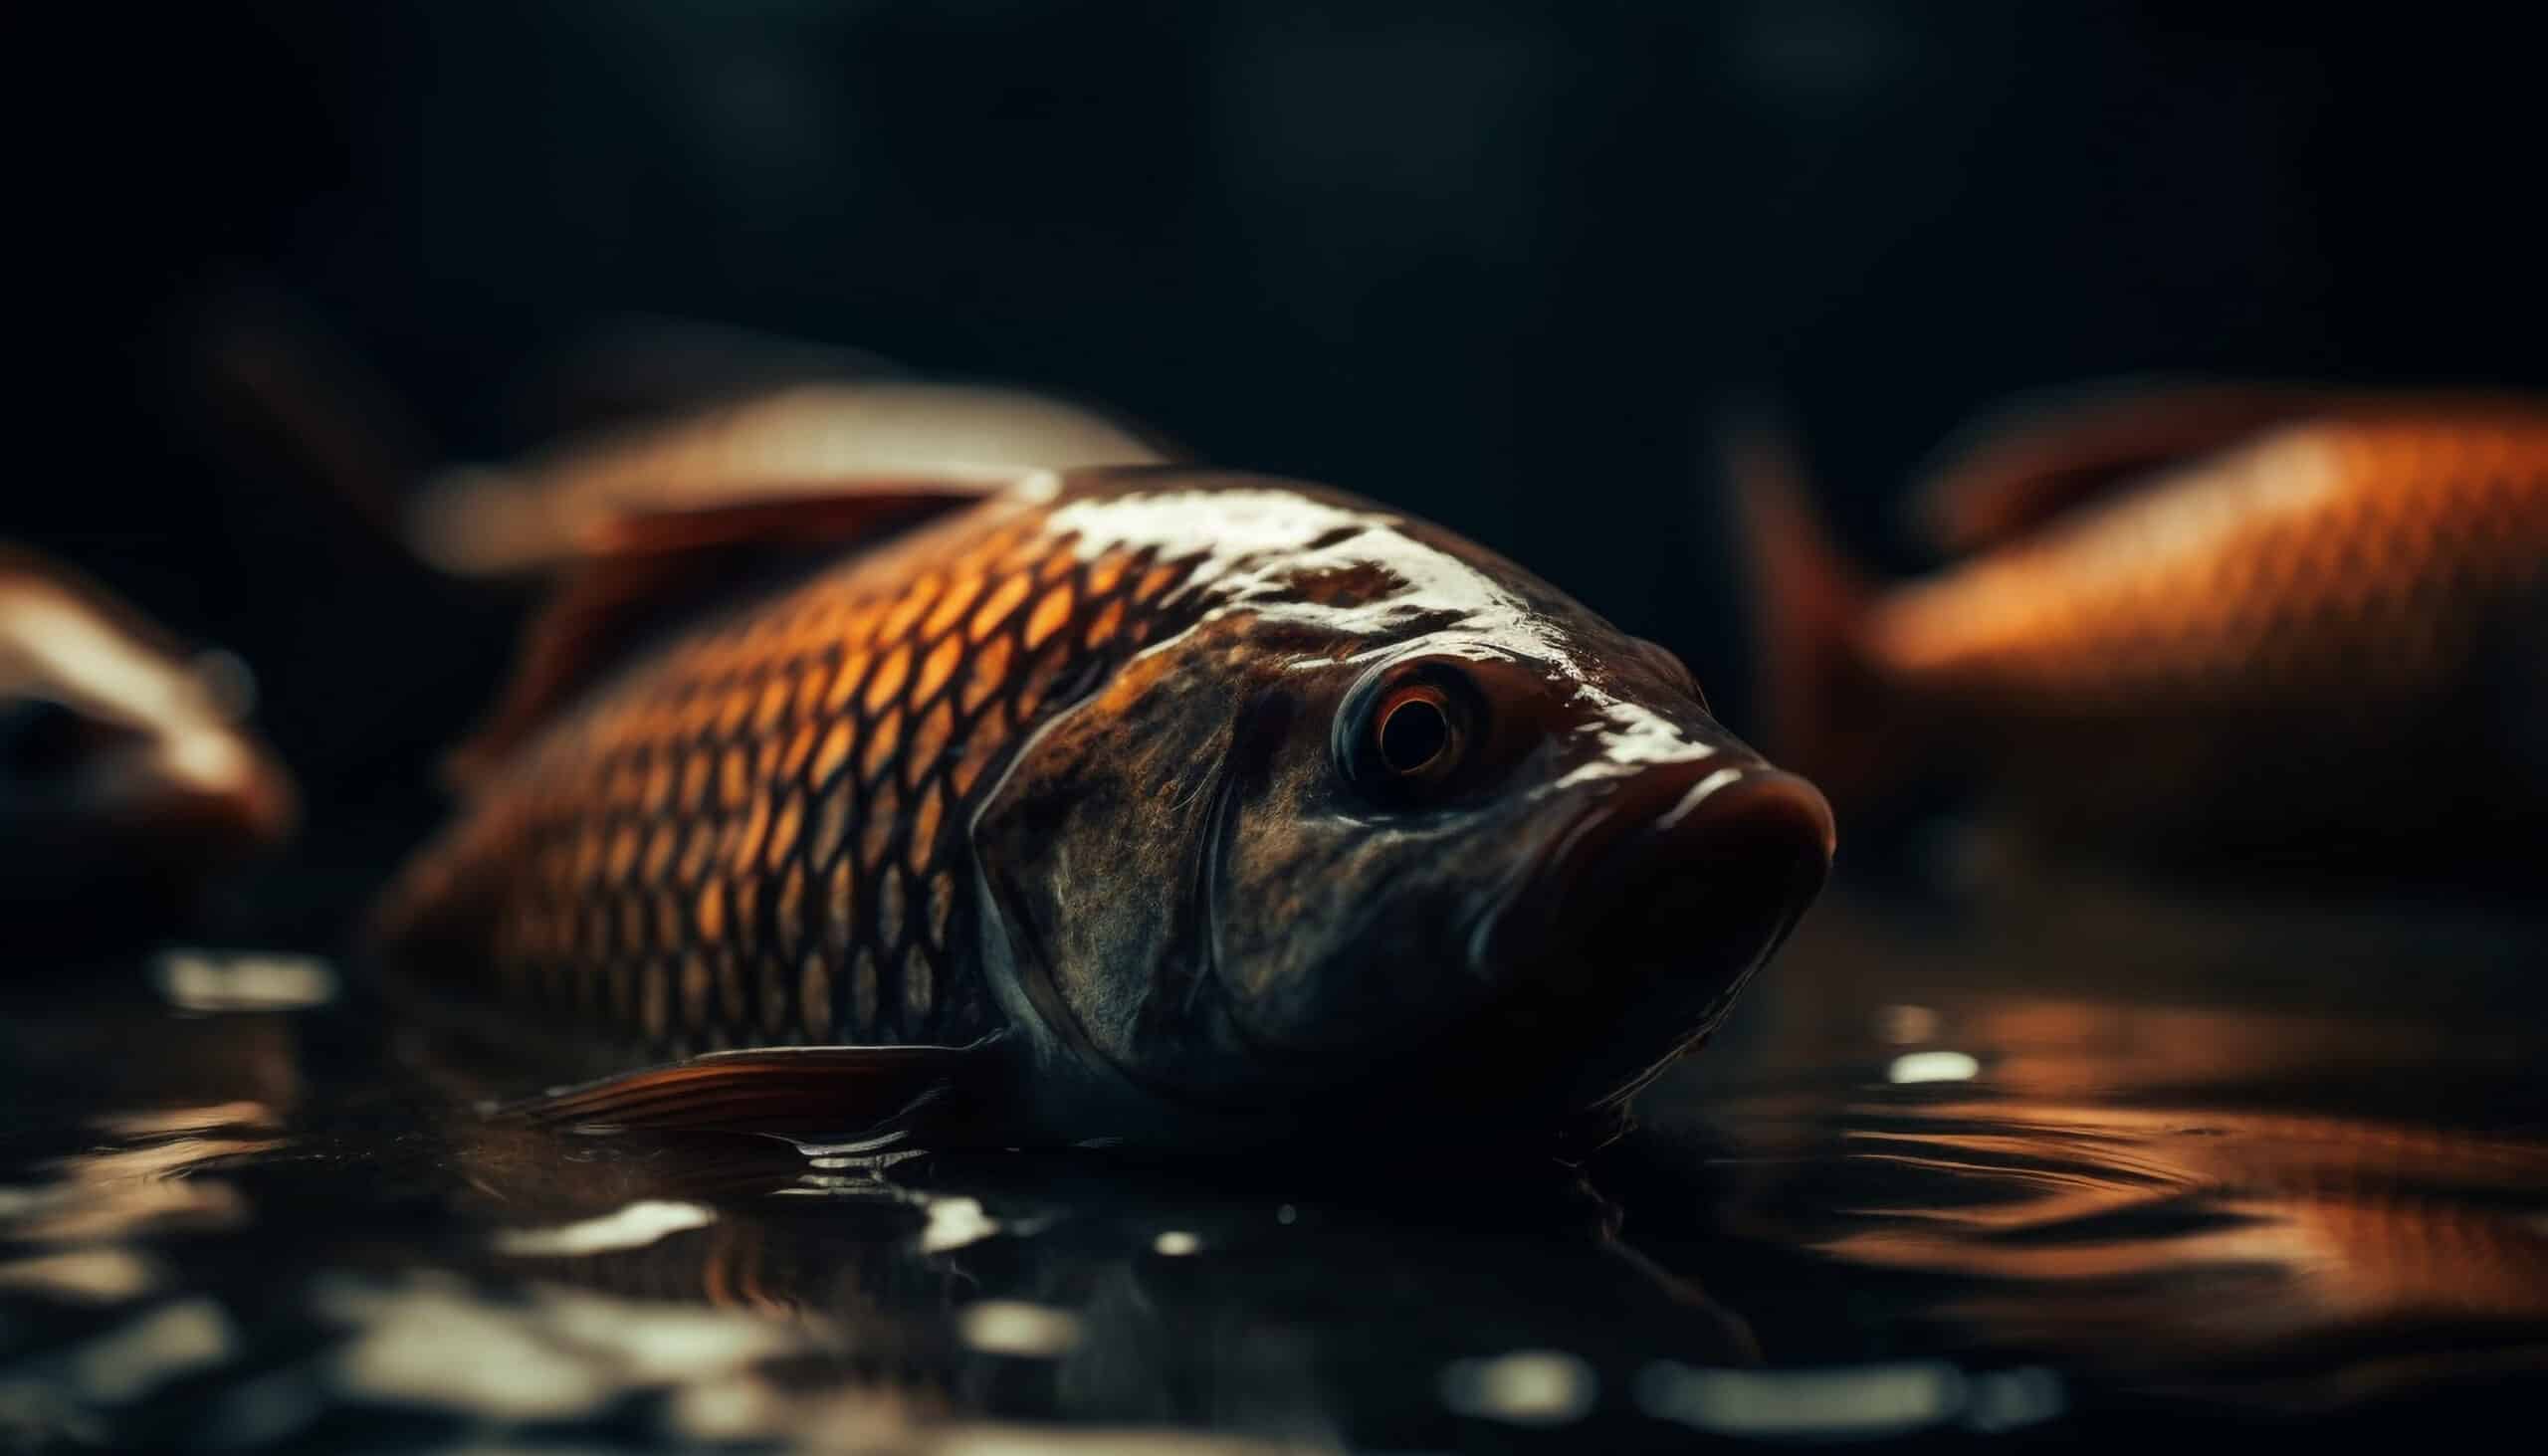 fanatic4fishing.com : Why aren't the fish biting at night?